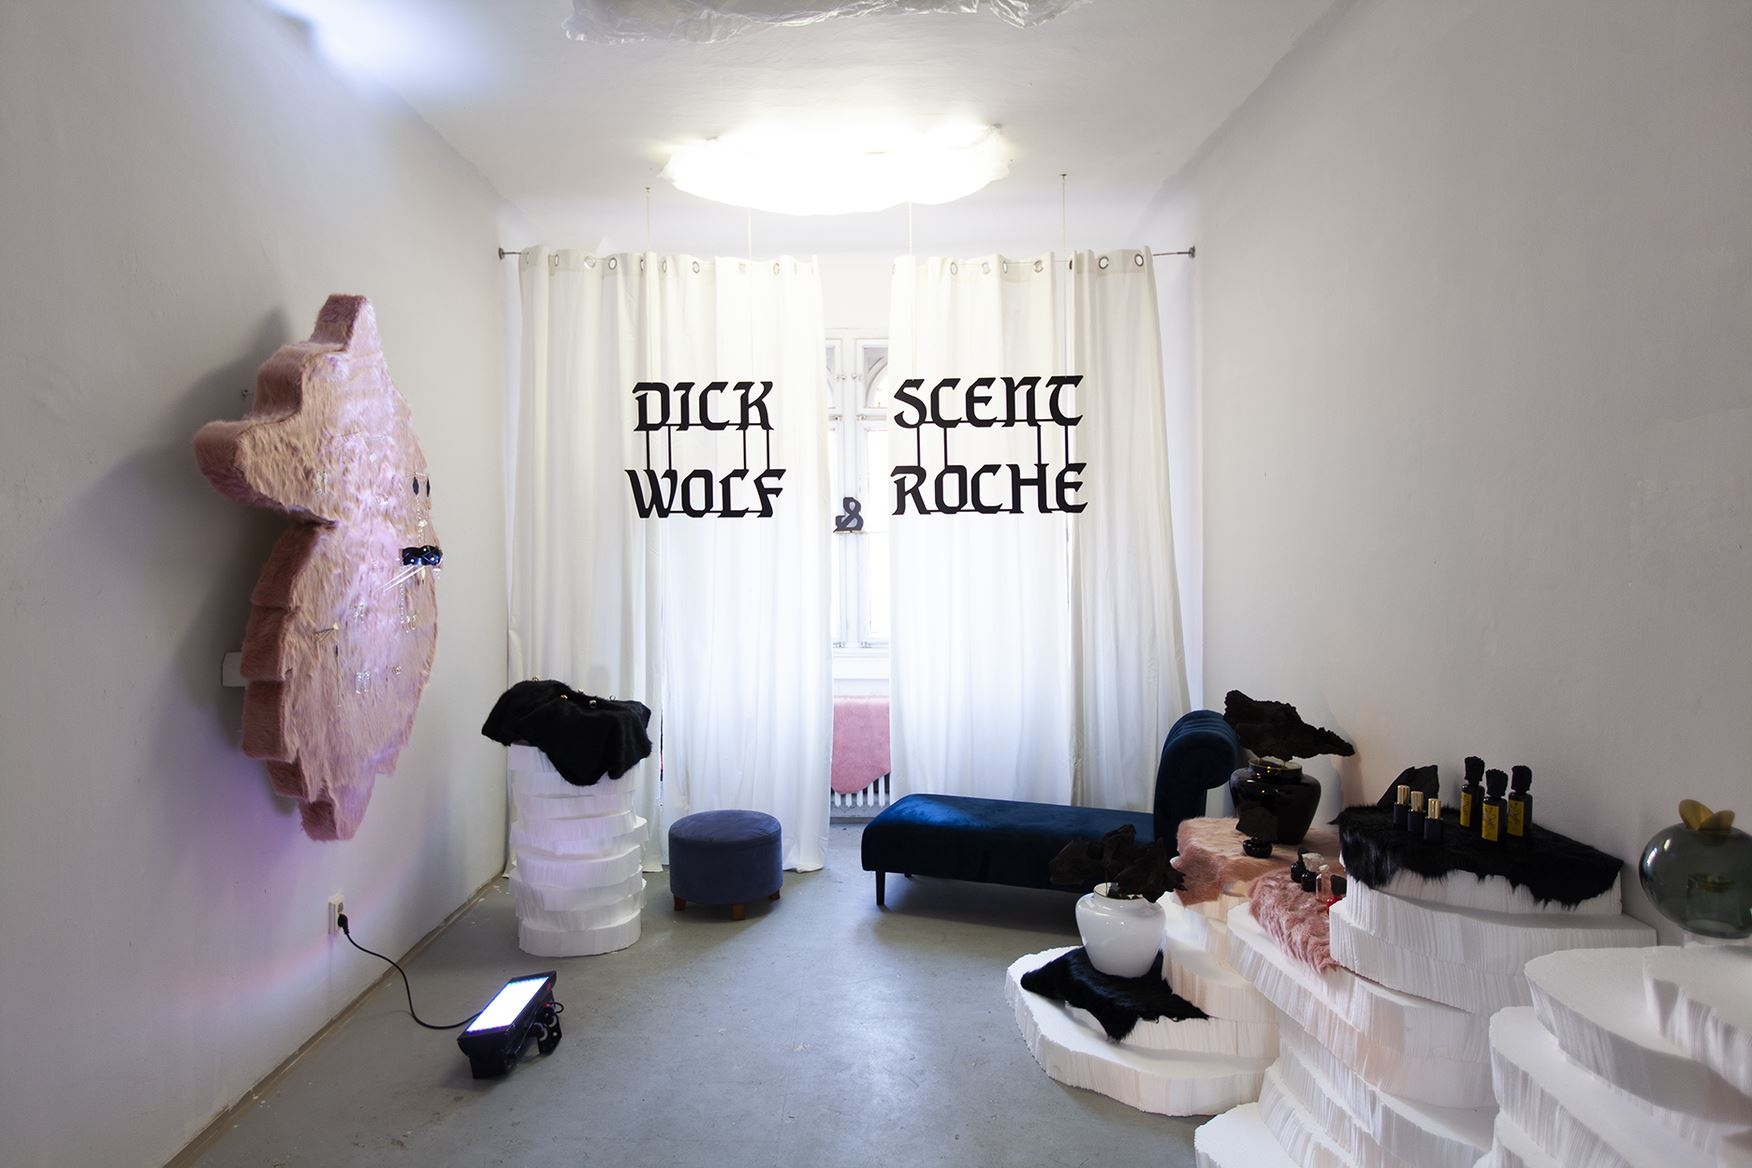 Dick Wolf & Scent Roche